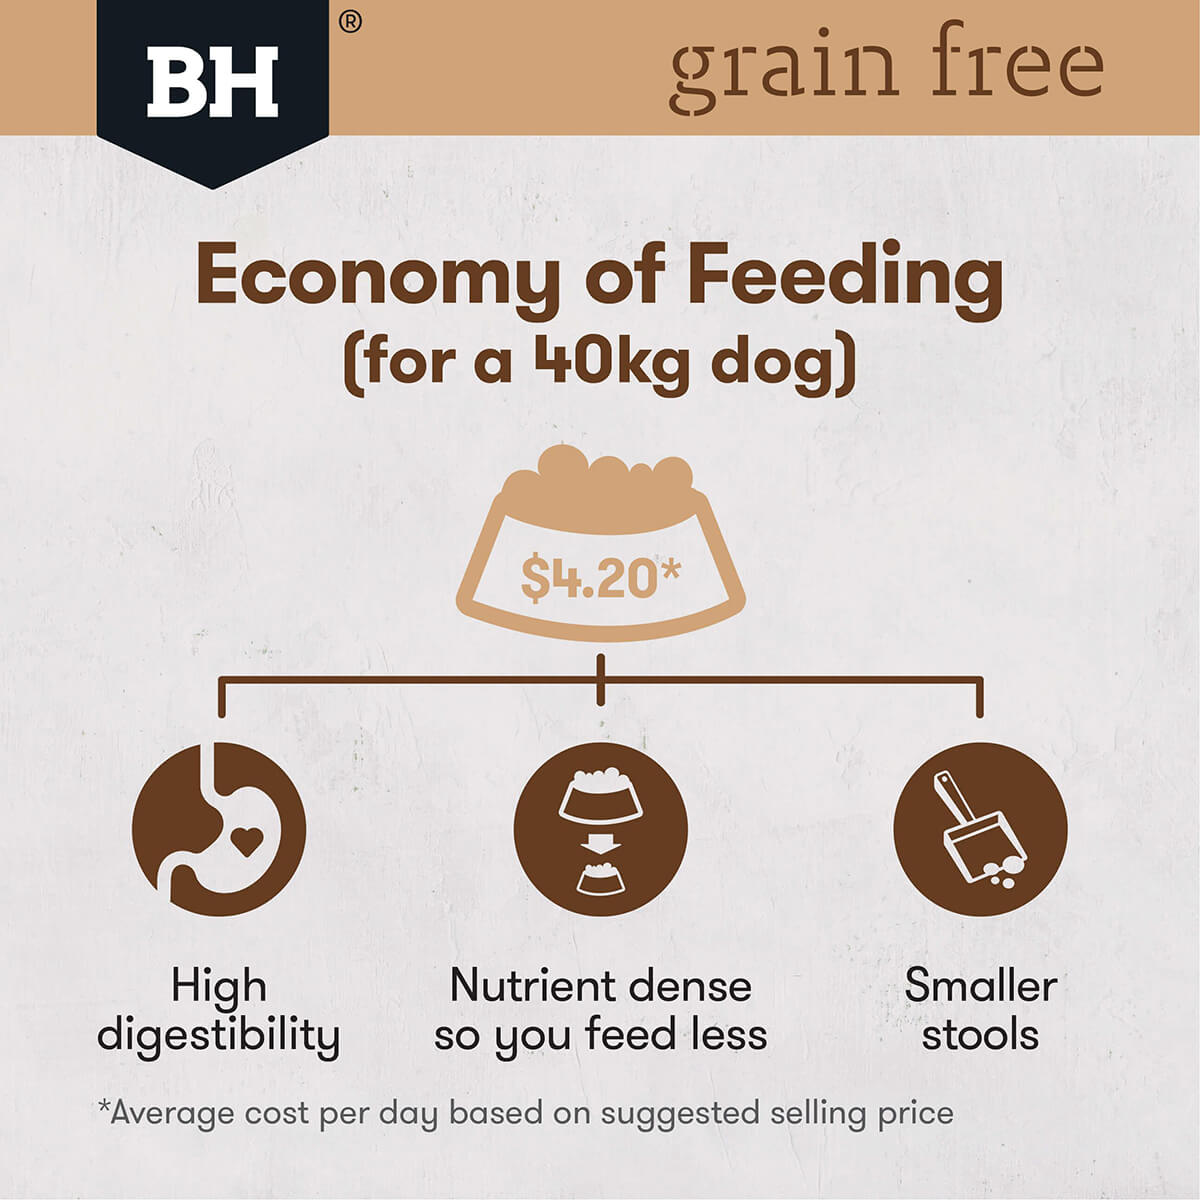 Black Hawk Grain Free Large Breed Adult Chicken Dry Dog Food 15kg